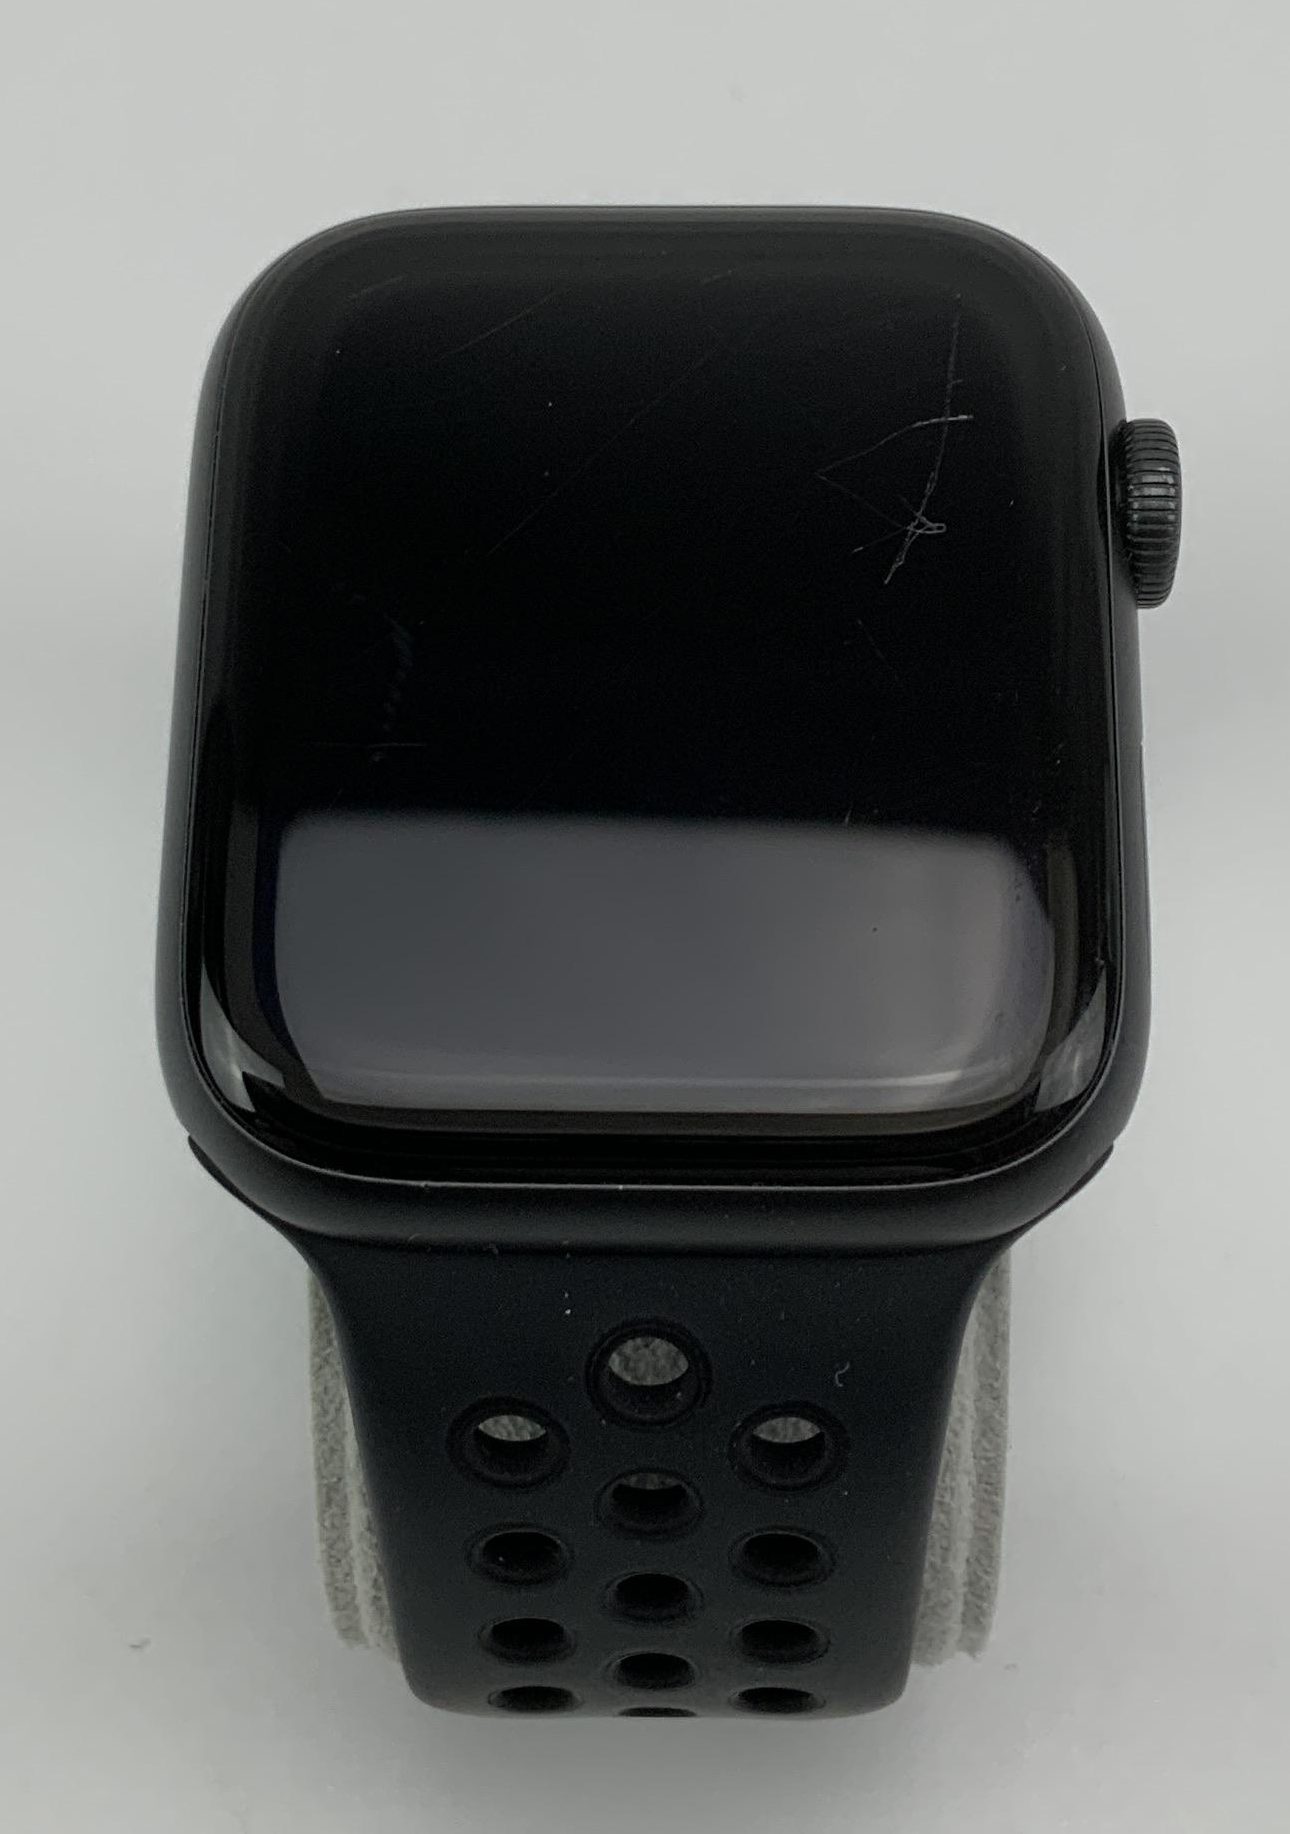 Watch Series 6 Aluminum Cellular (44mm), Space Gray, Bild 1